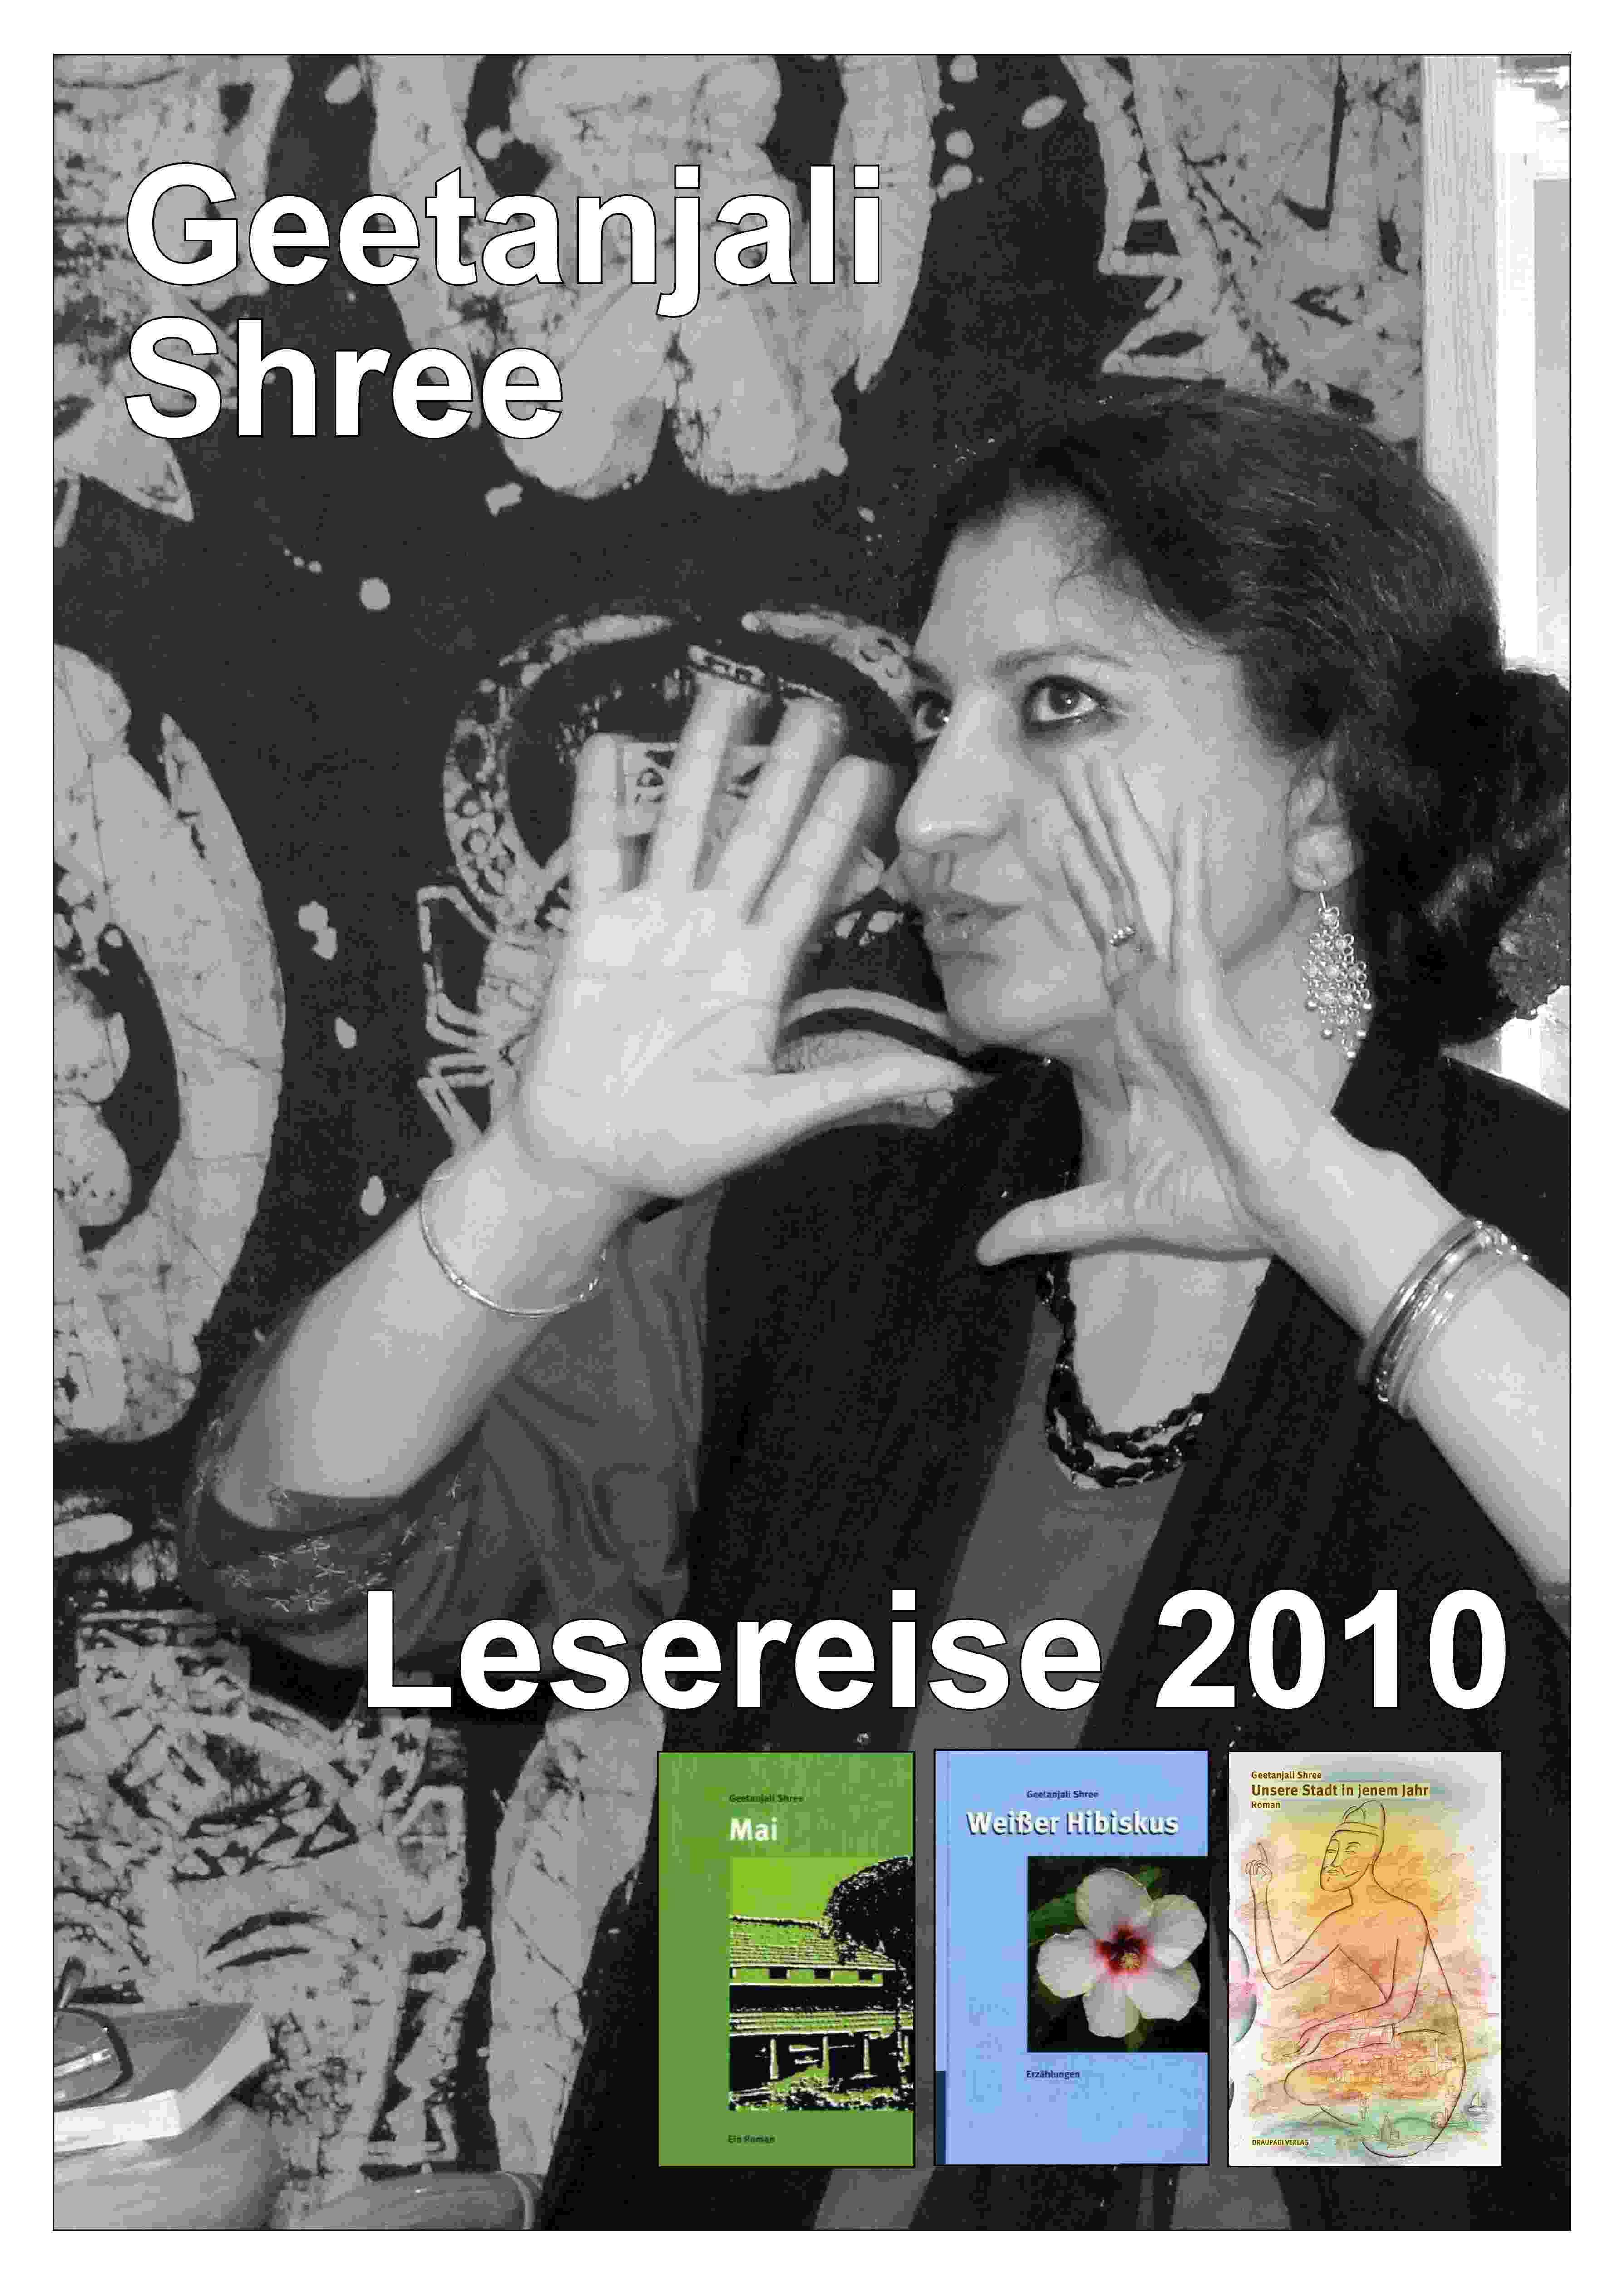 Lesereise Geetanjali Shree 2010